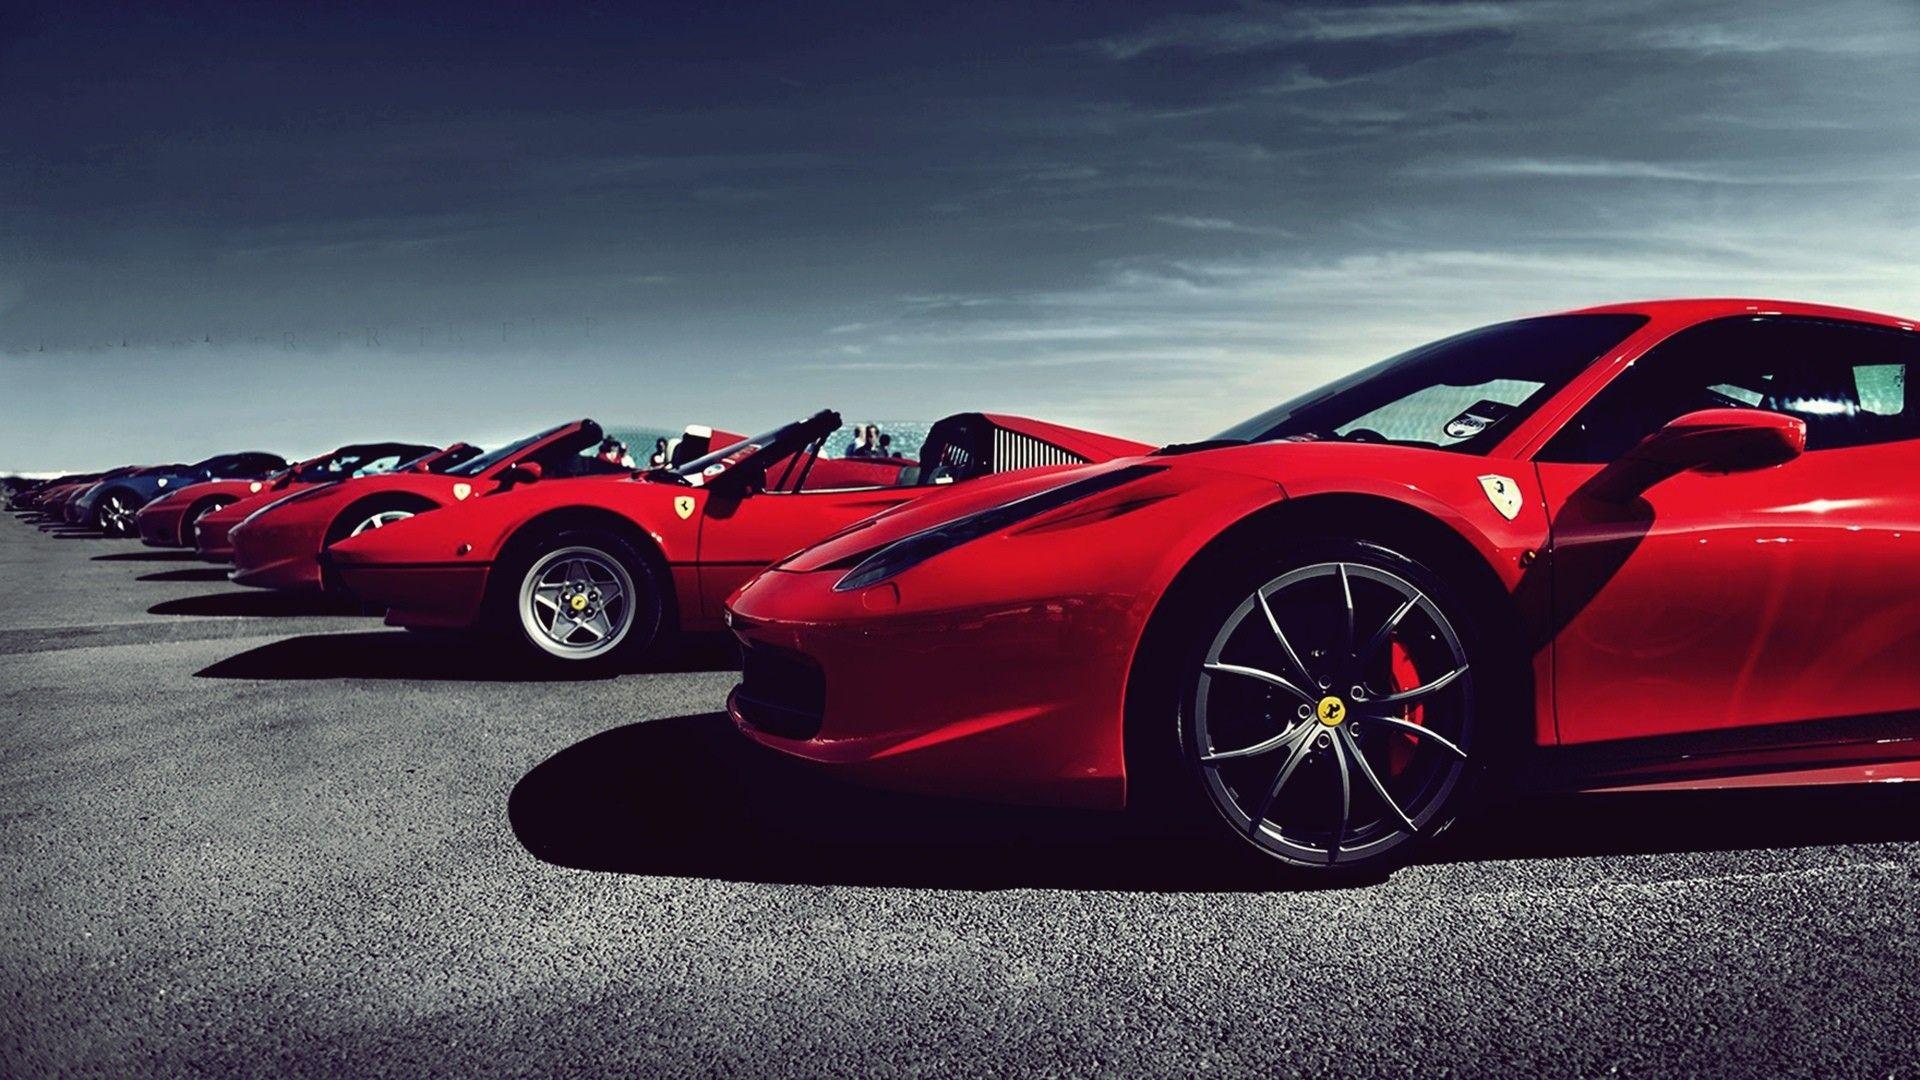 Ferrari Wallpaper 1080p Free Download > SubWallpaper